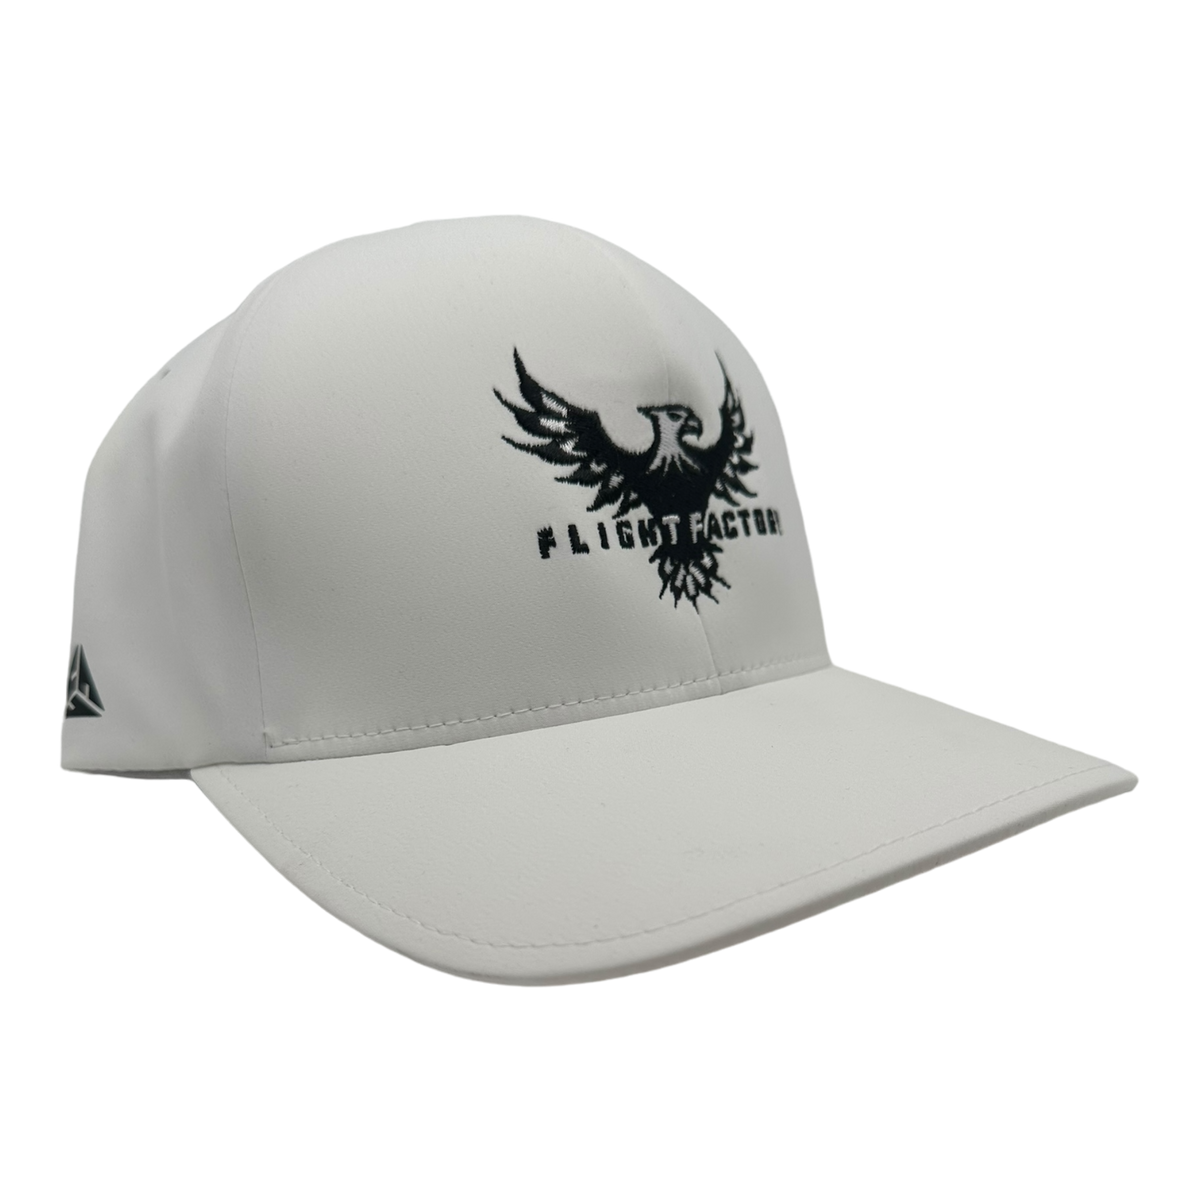 Flight Factory Flexfit Delta Hats